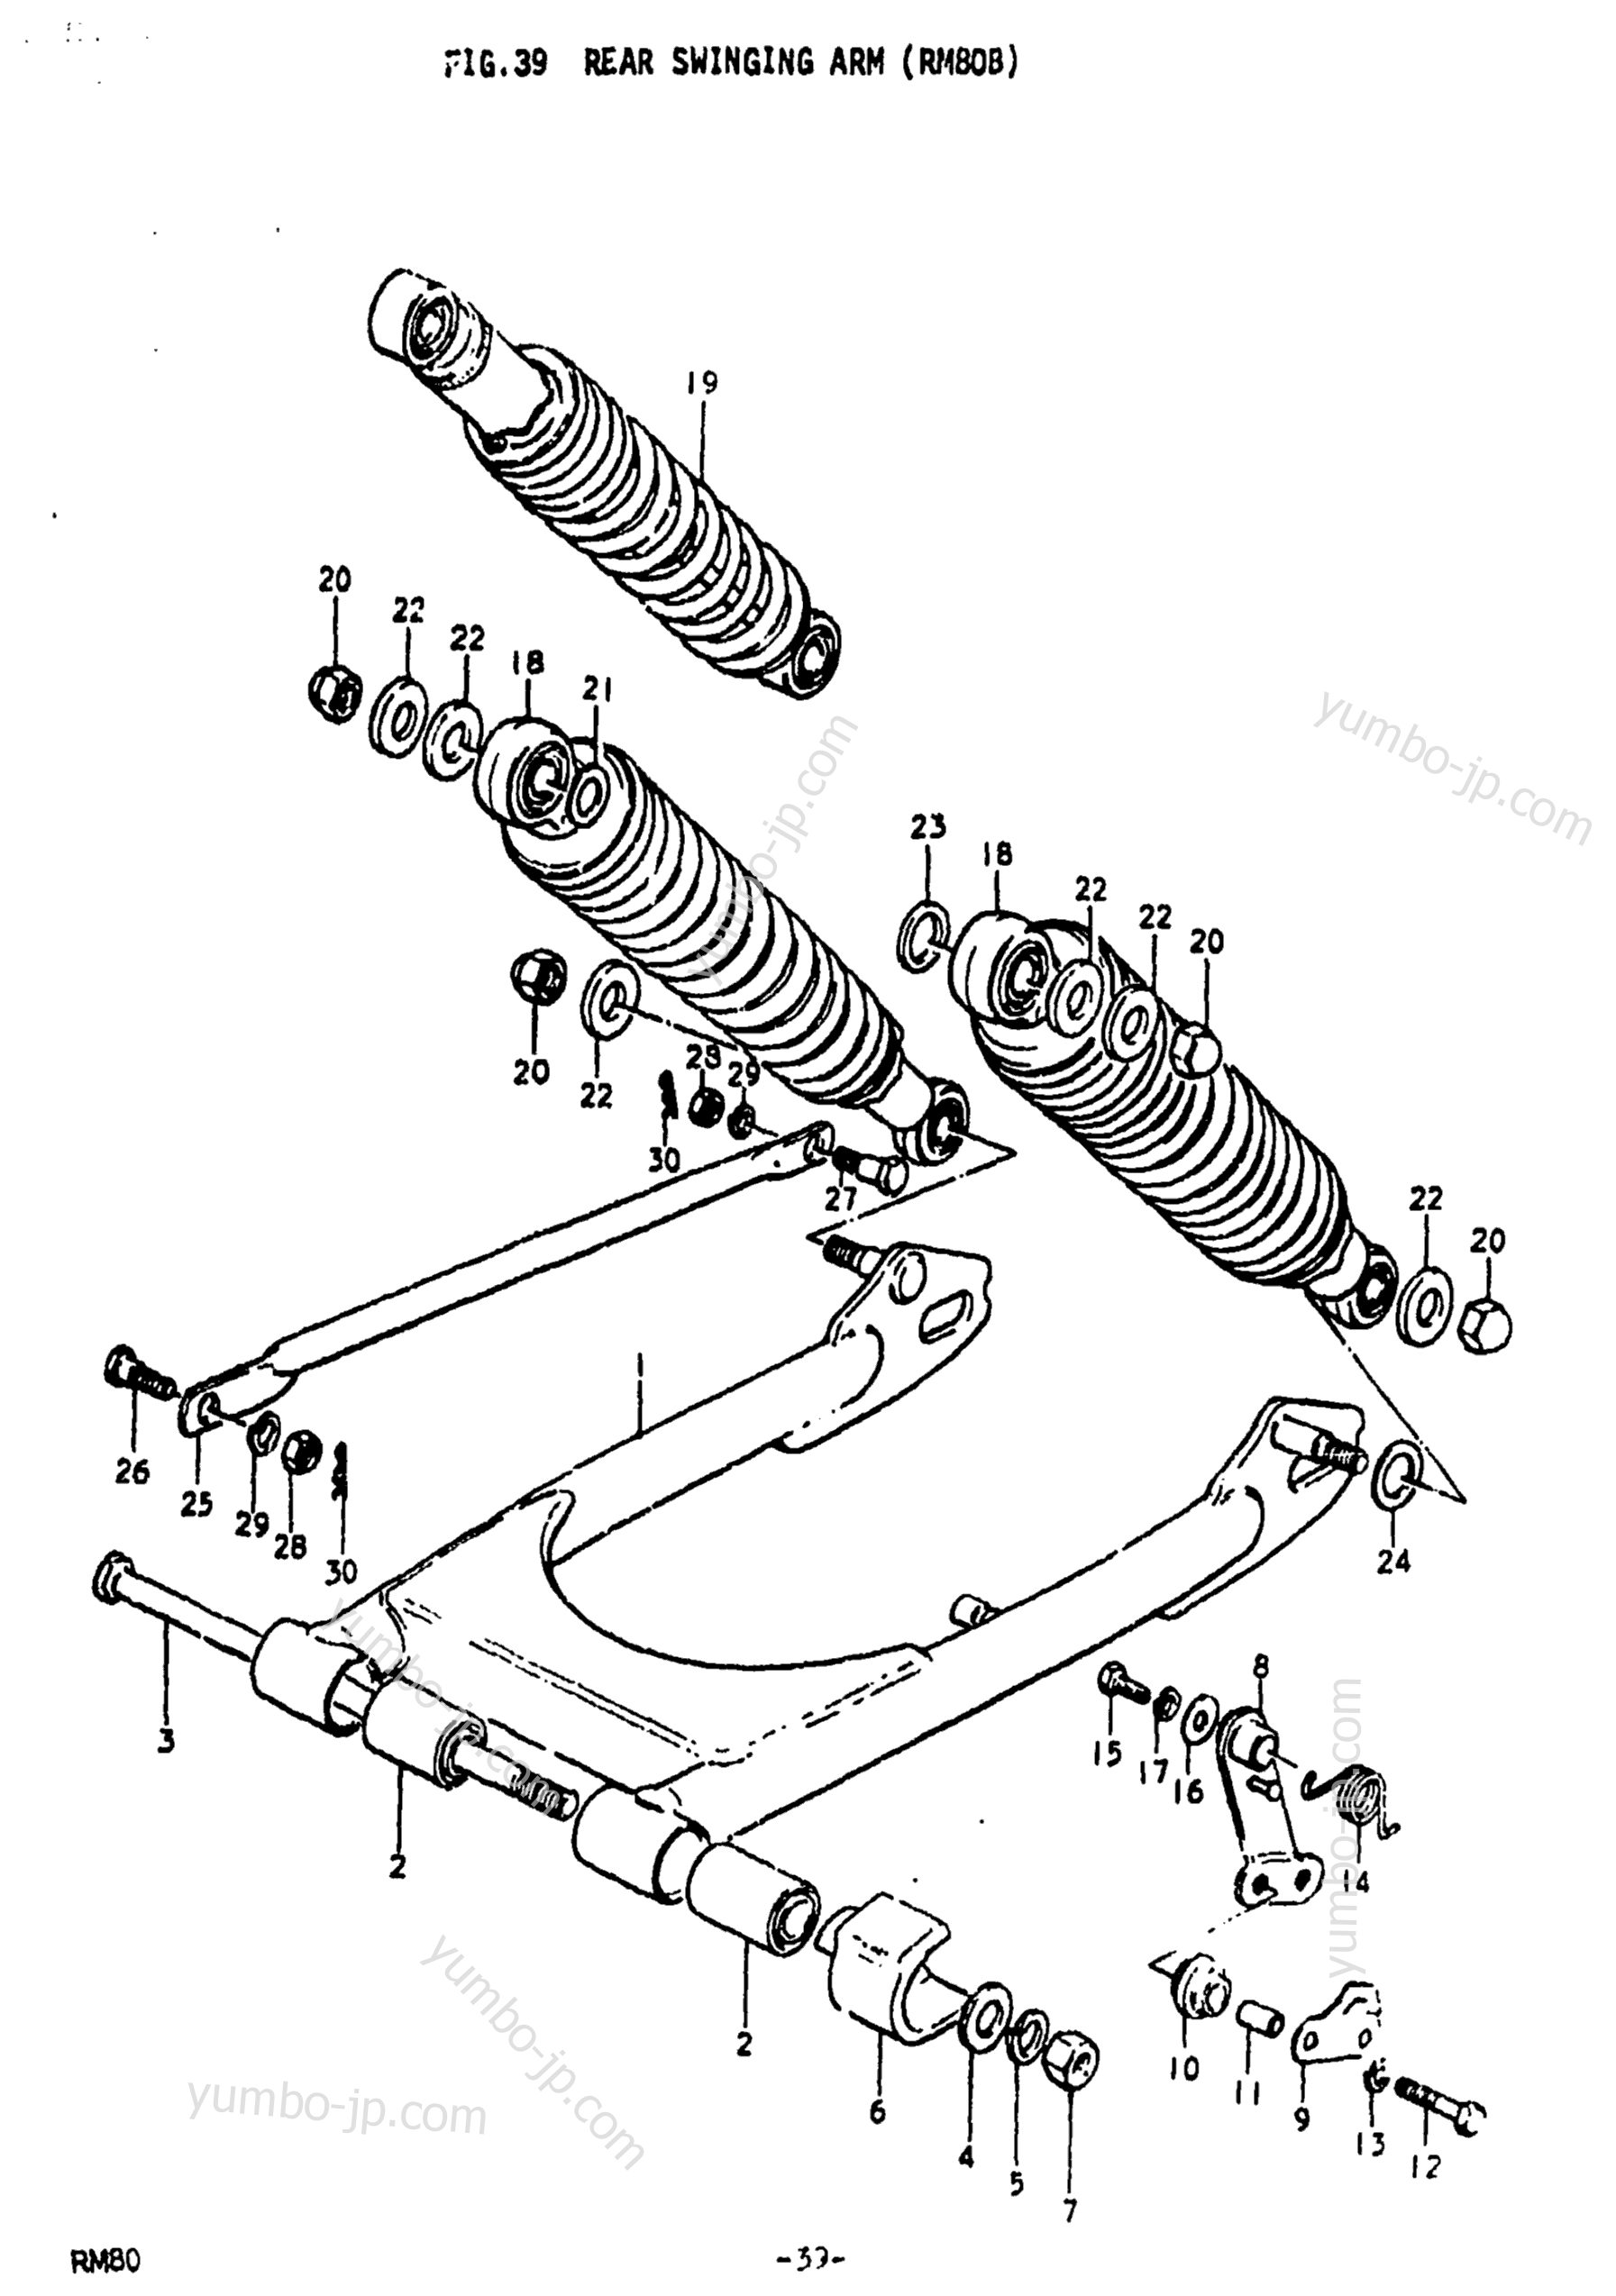 REAR SWINGING ARM (RM80B) for motorcycles SUZUKI RM80 1979 year